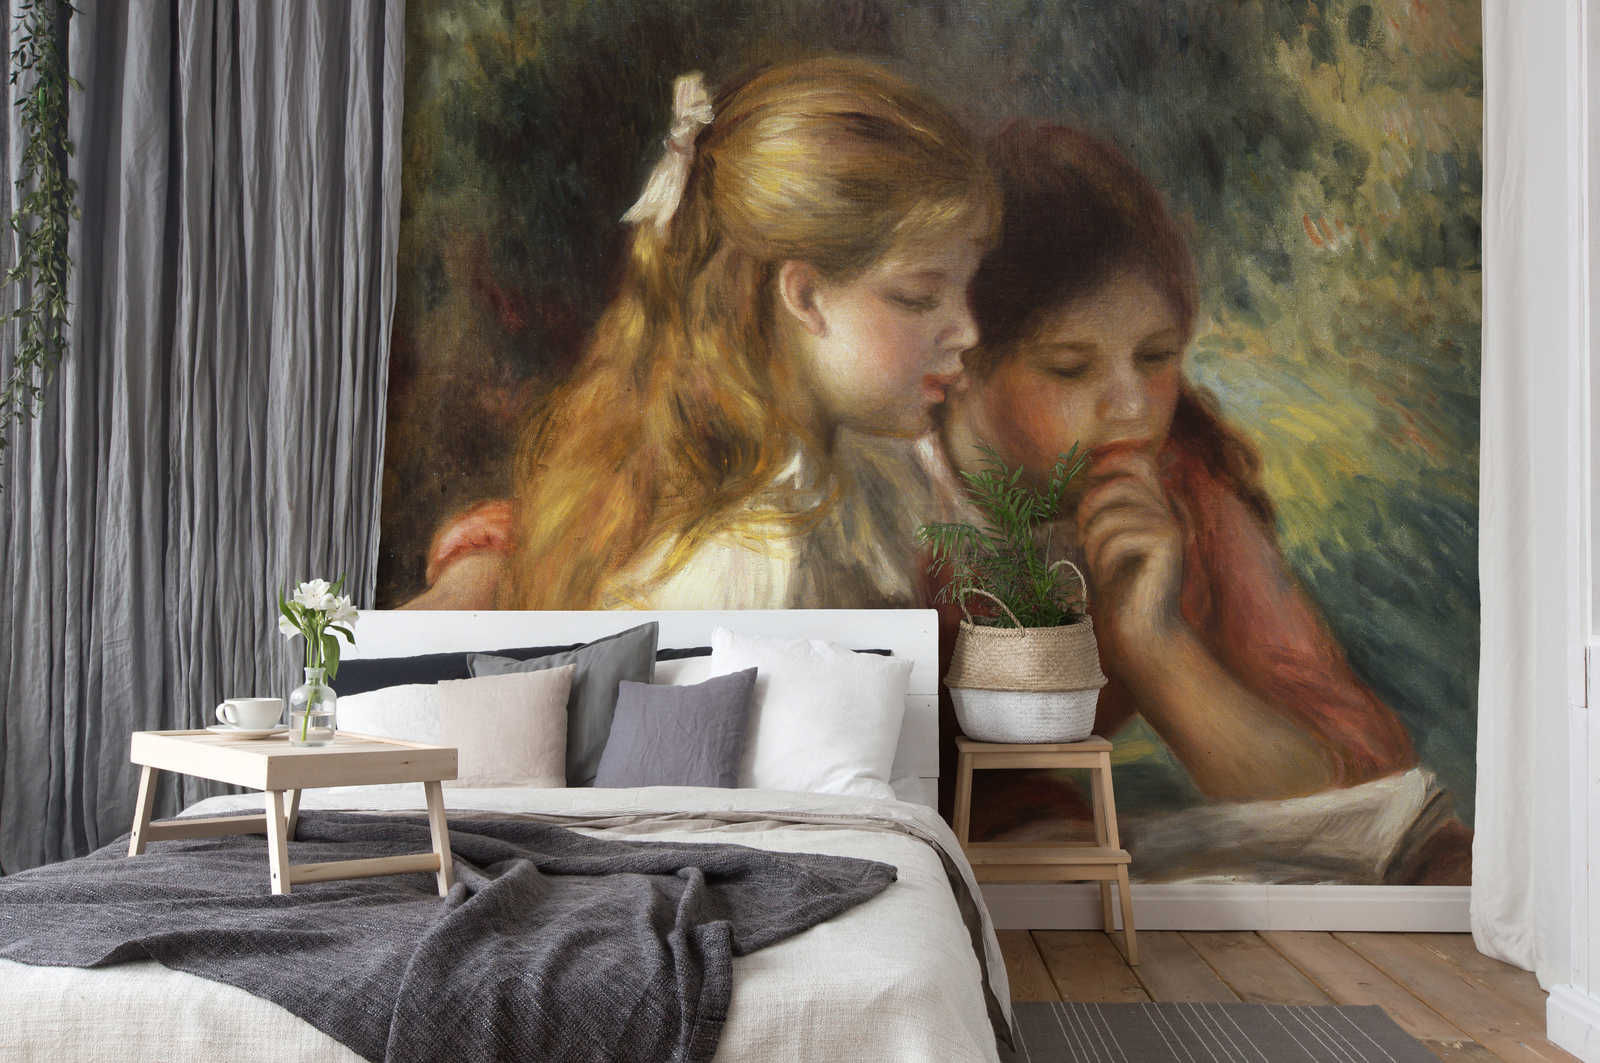             The Reading" mural by Pierre Auguste Renoir
        